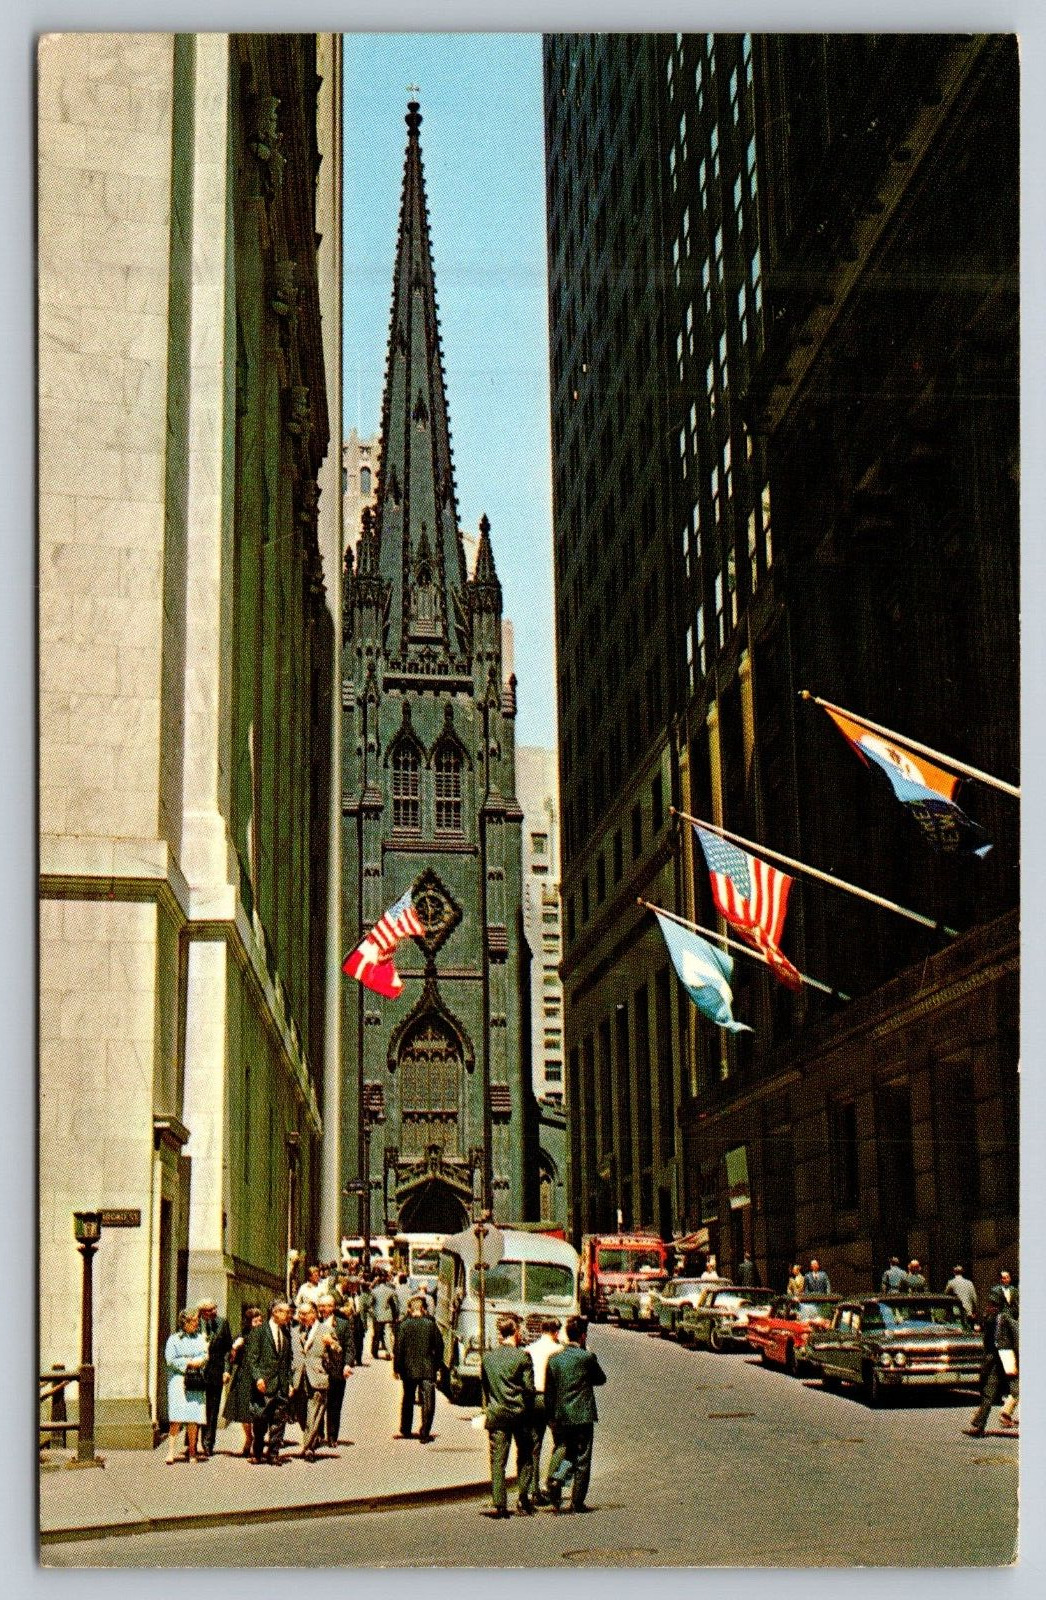 Postcard Wall Street Center of Financial District New York City New York USA